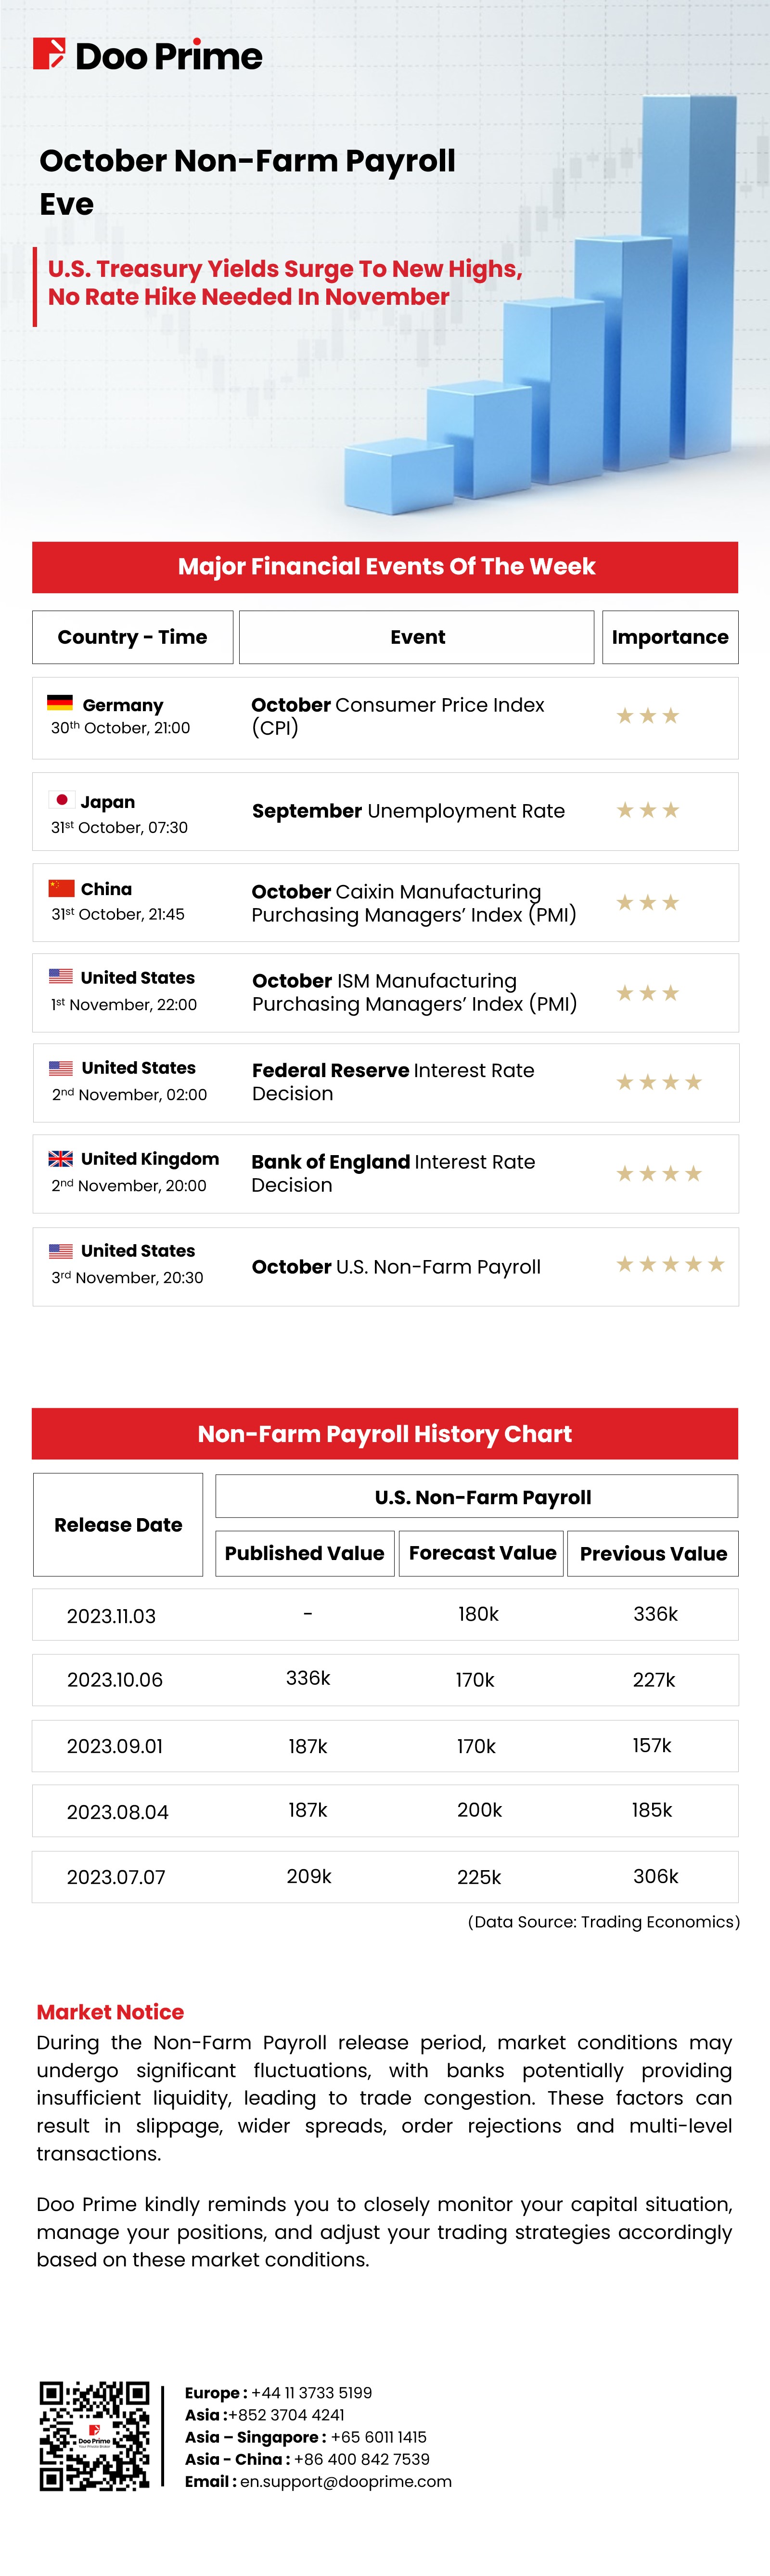 October Non-Farm Payroll Eve